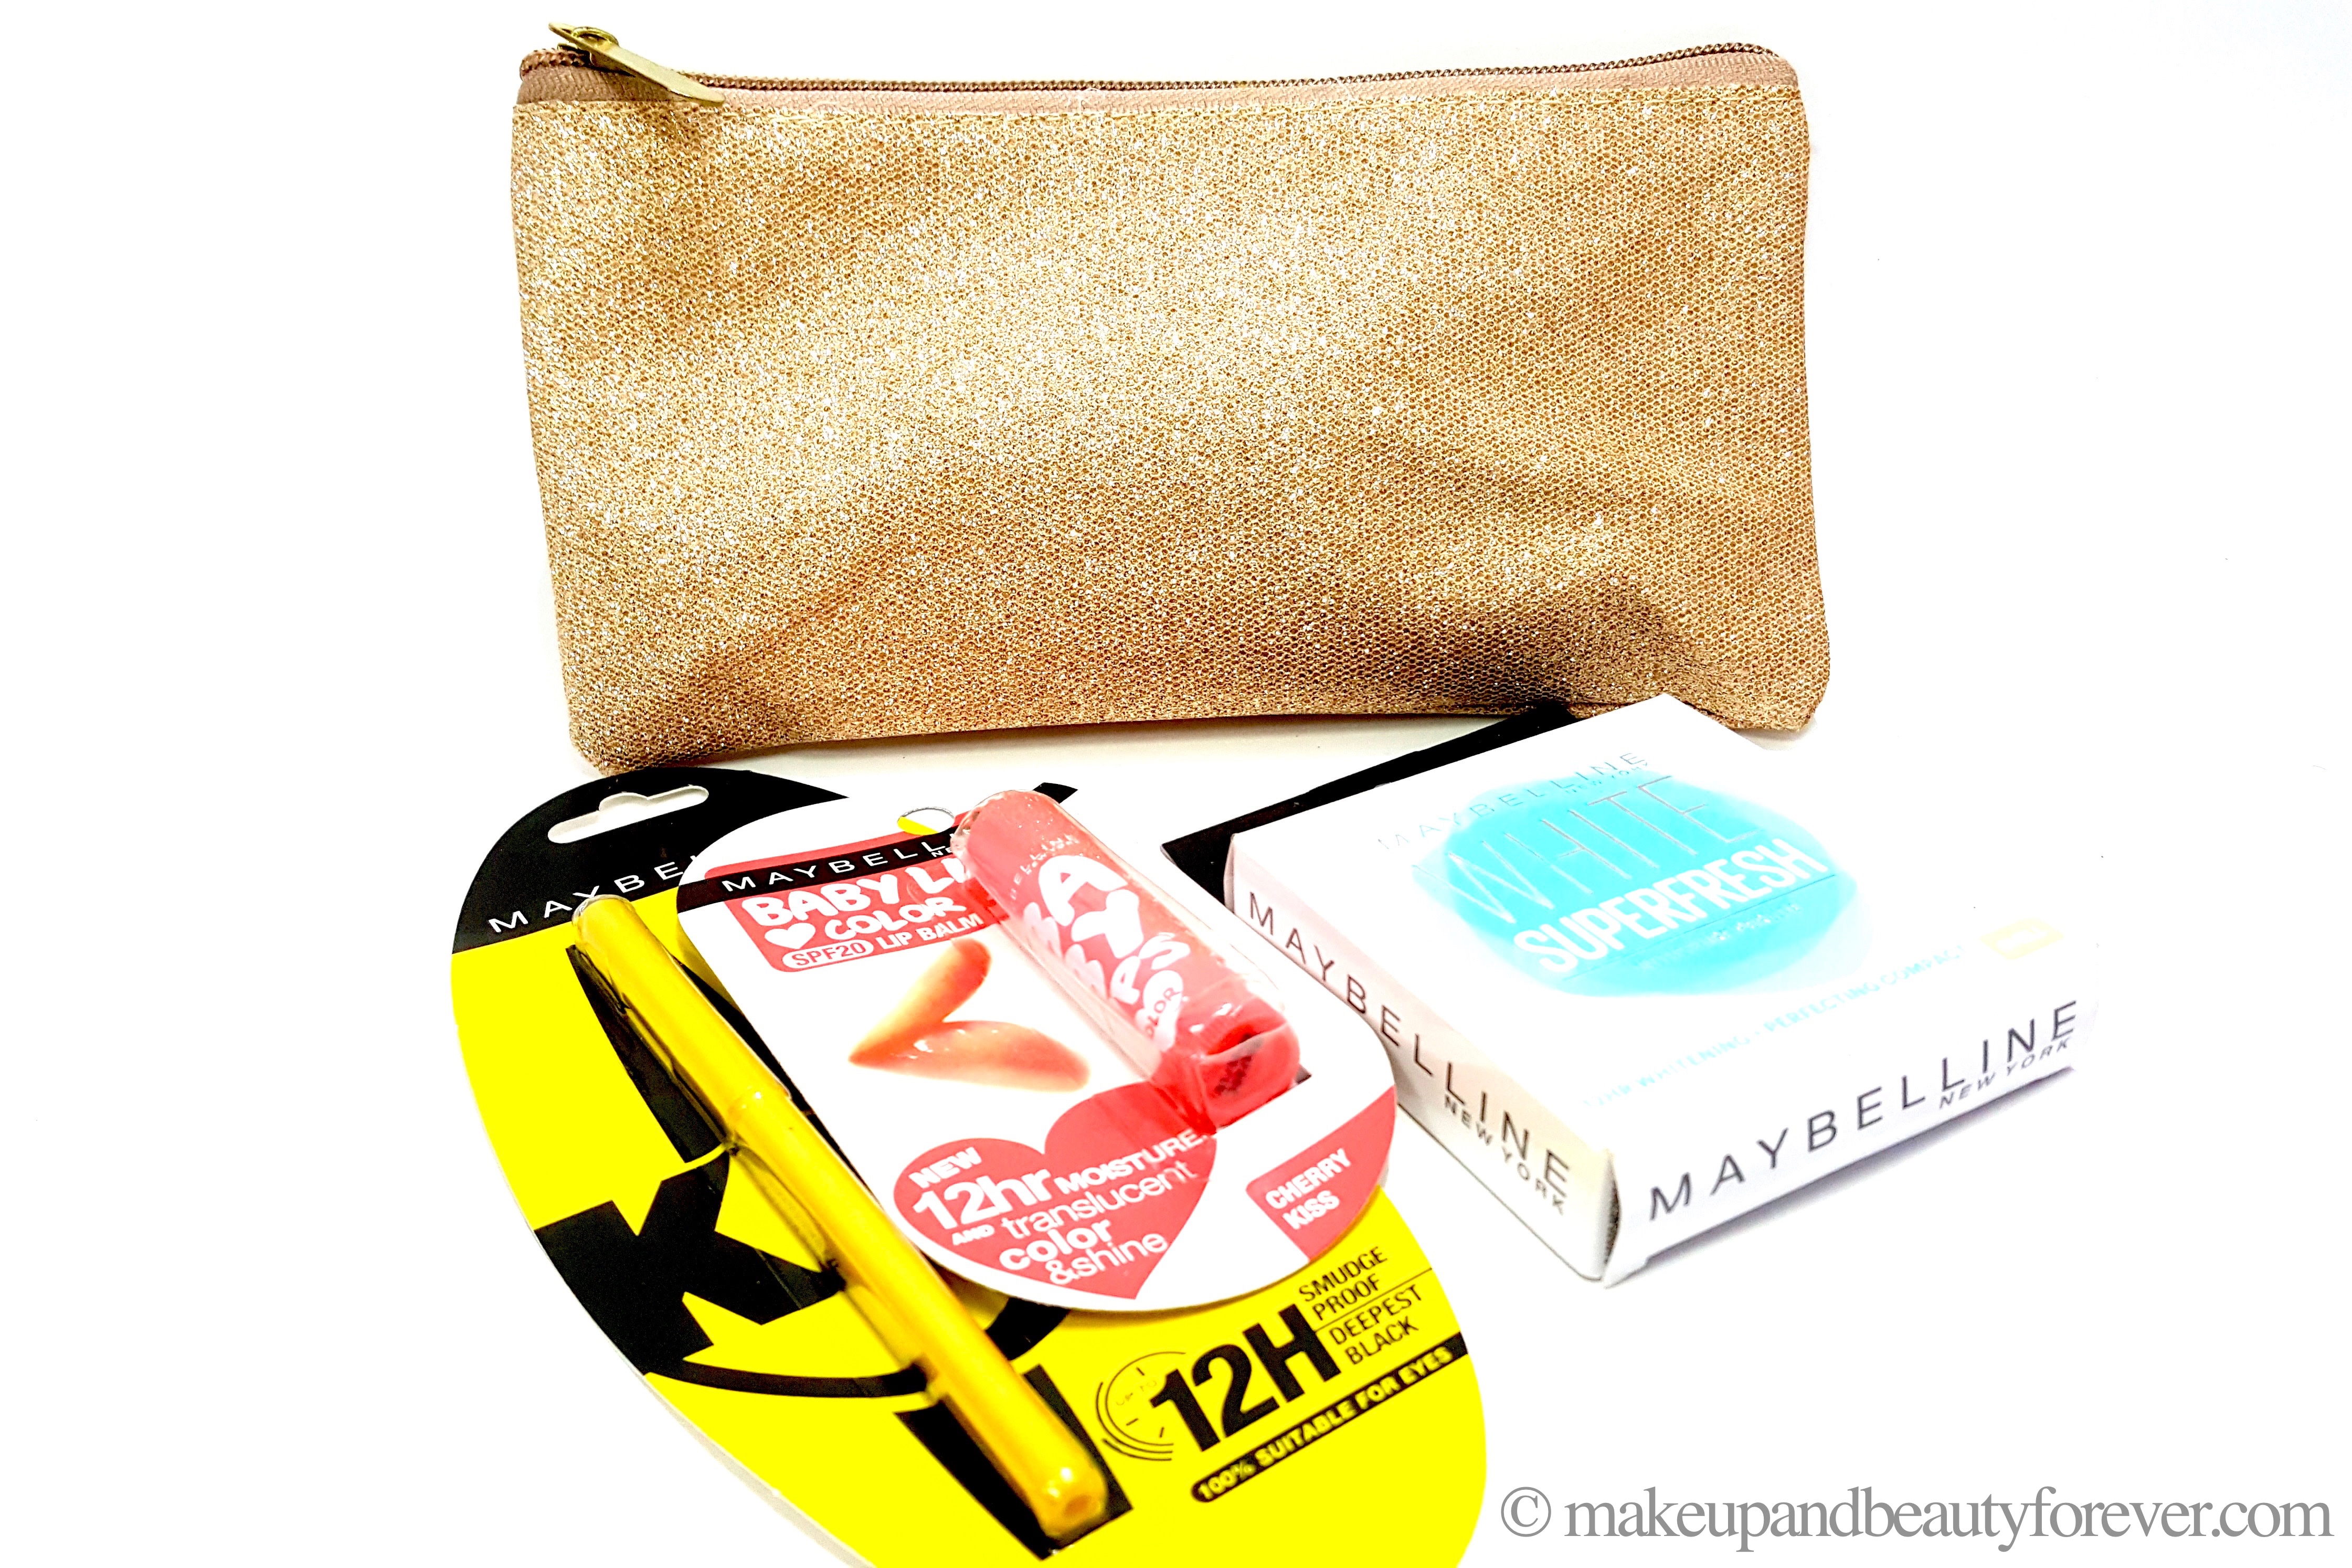 Stylish Maybelline Cosmetics Bag